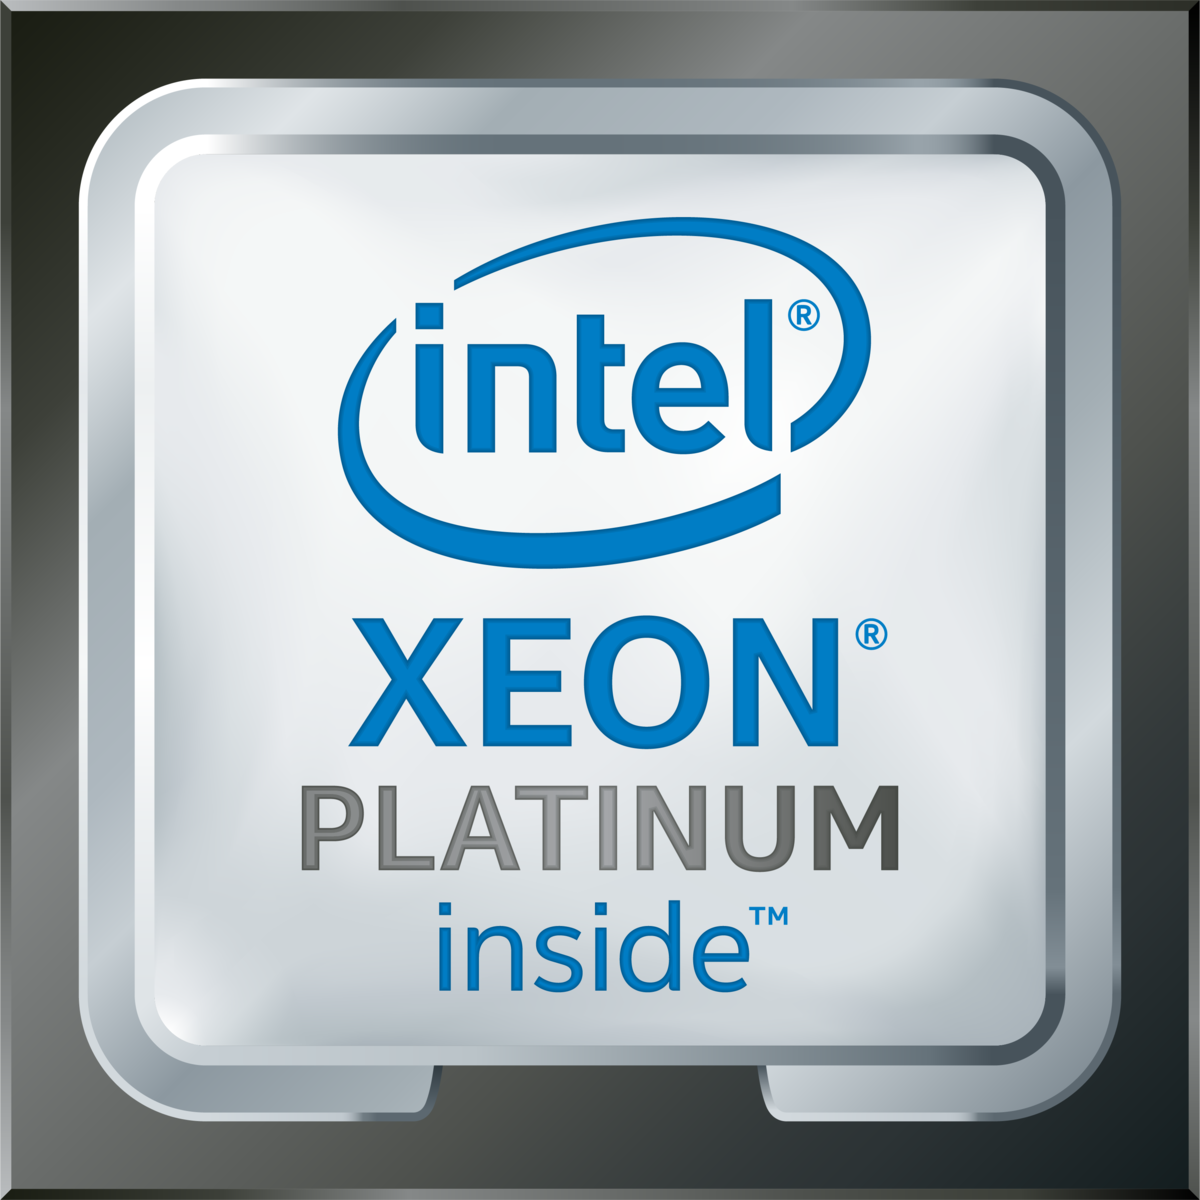 Intel(R) Xeon(R) Platinum 8171M CPU @ 2.60GHz's logo